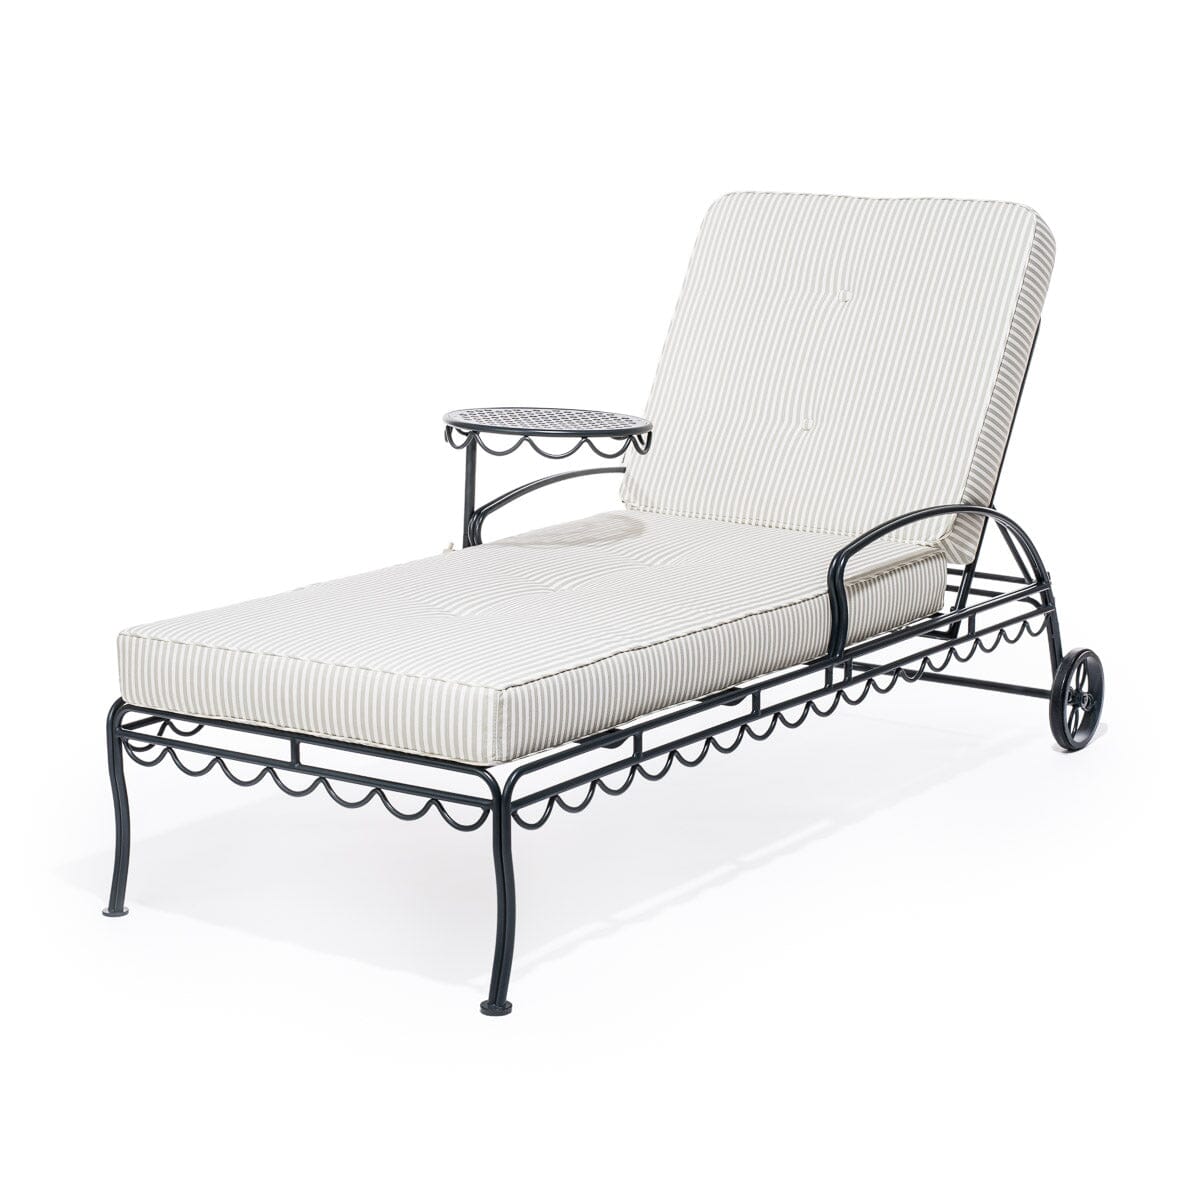 The Al Fresco Sun Lounger Cushion - Lauren's Sage Stripe Al Fresco Sun Lounger Cushions Business & Pleasure Co 